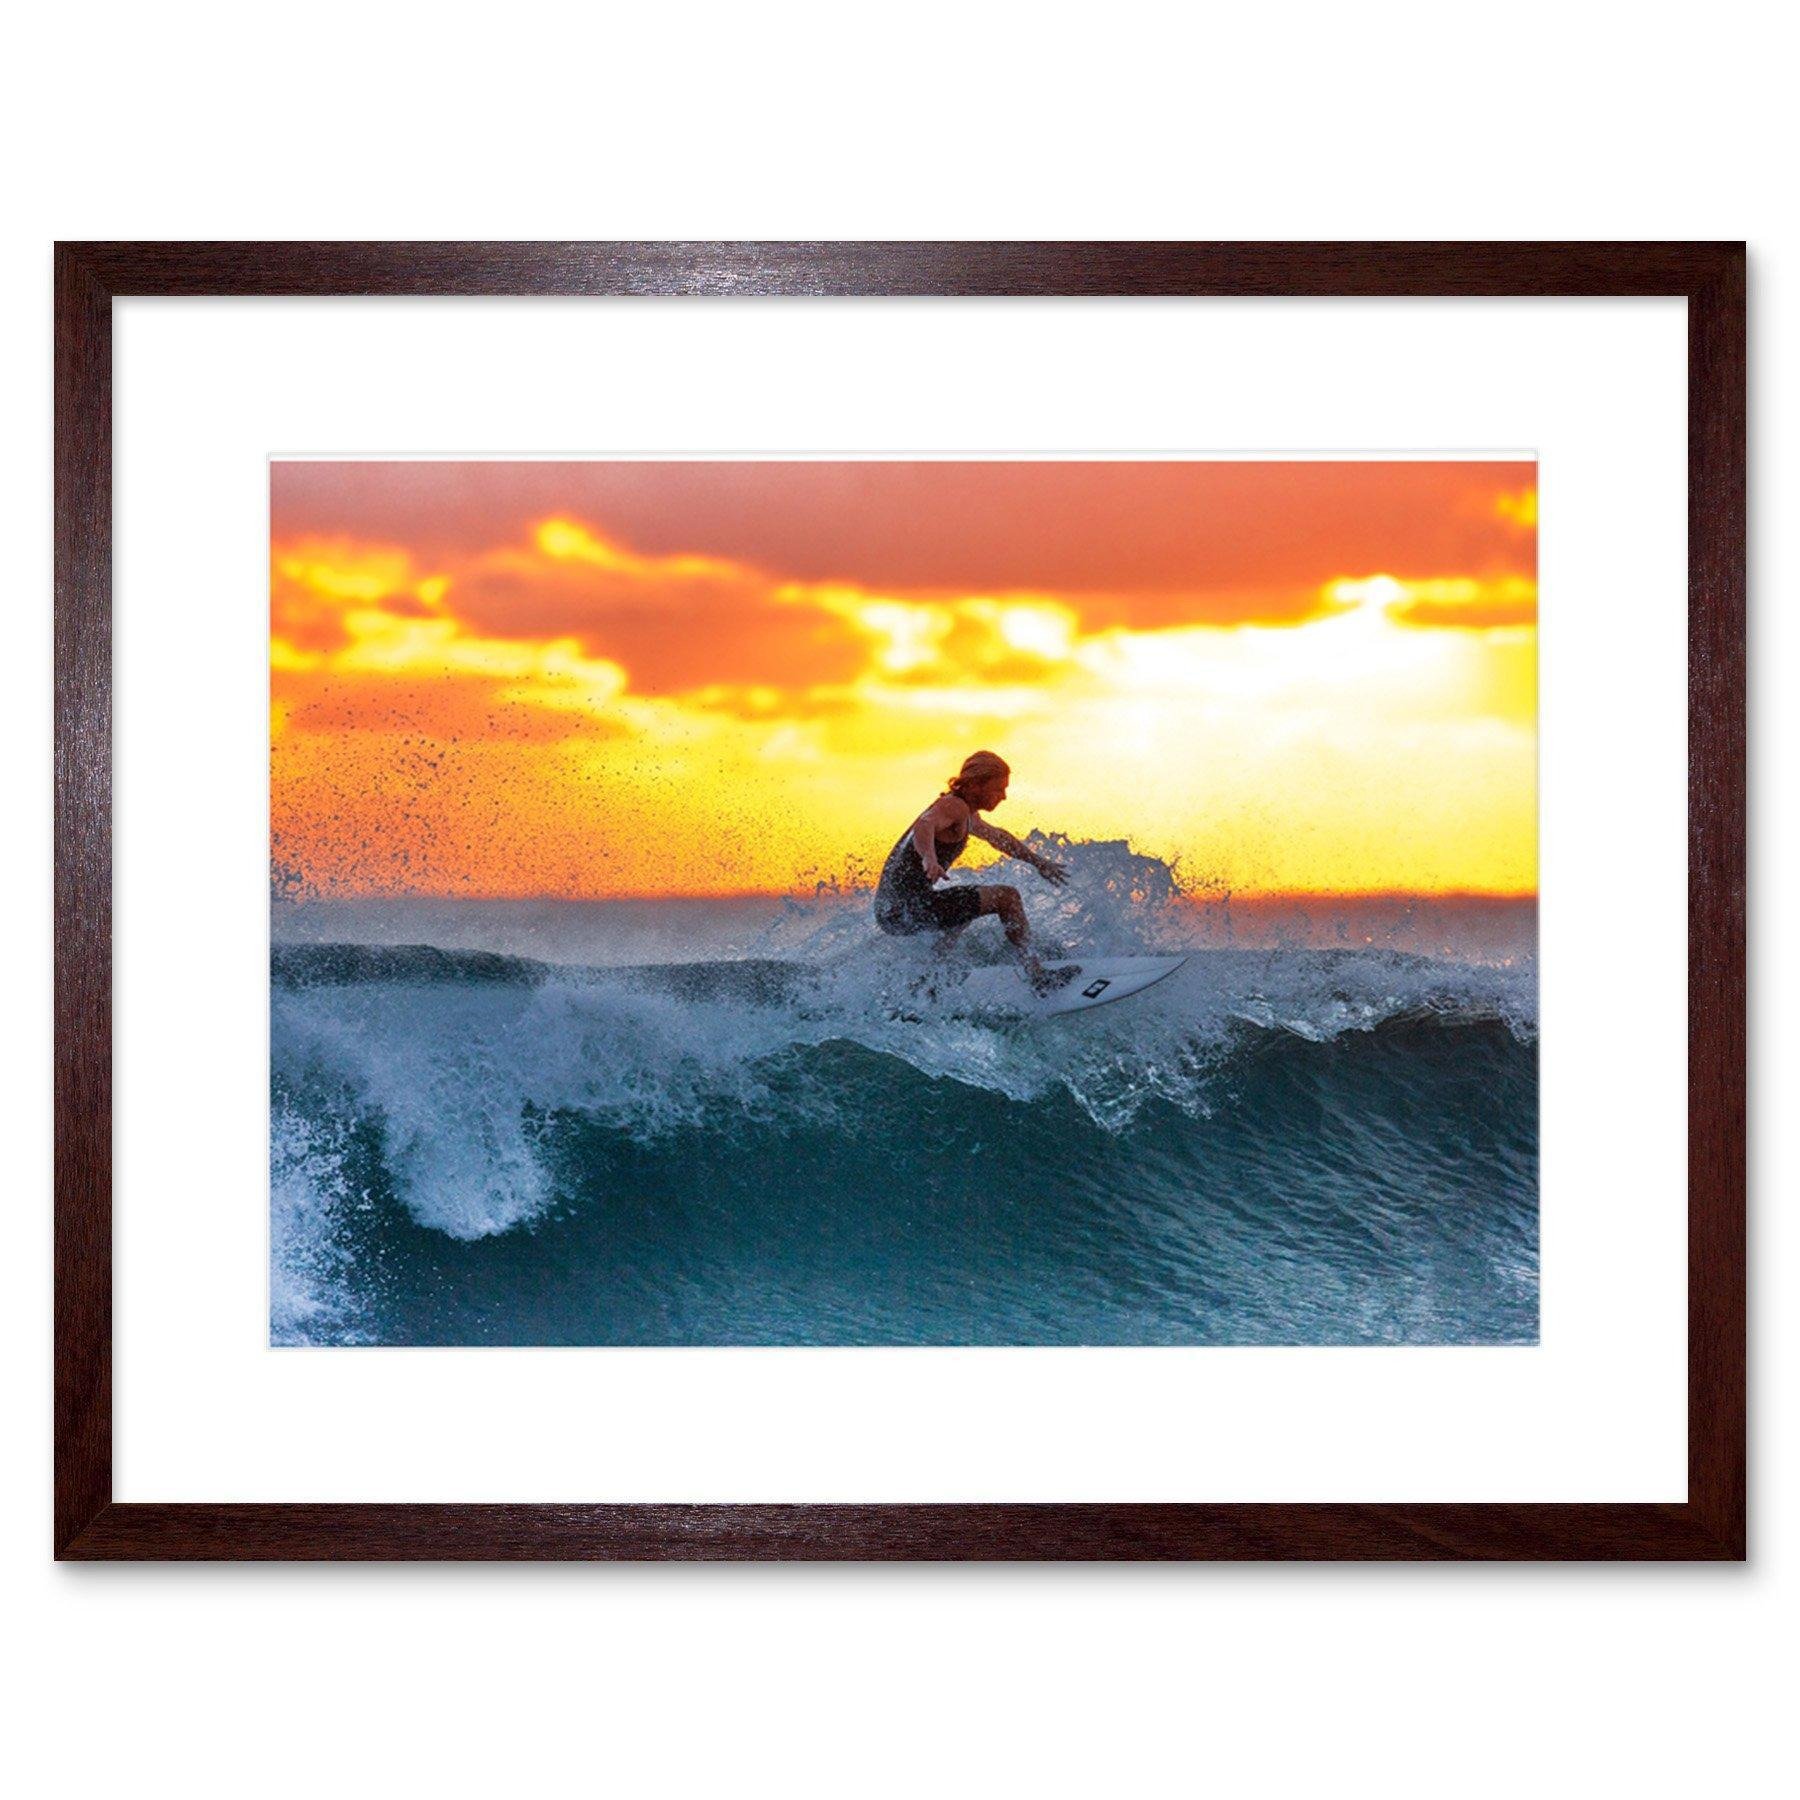 Sunset Surfer Waves Framed Wall Art Print - image 1